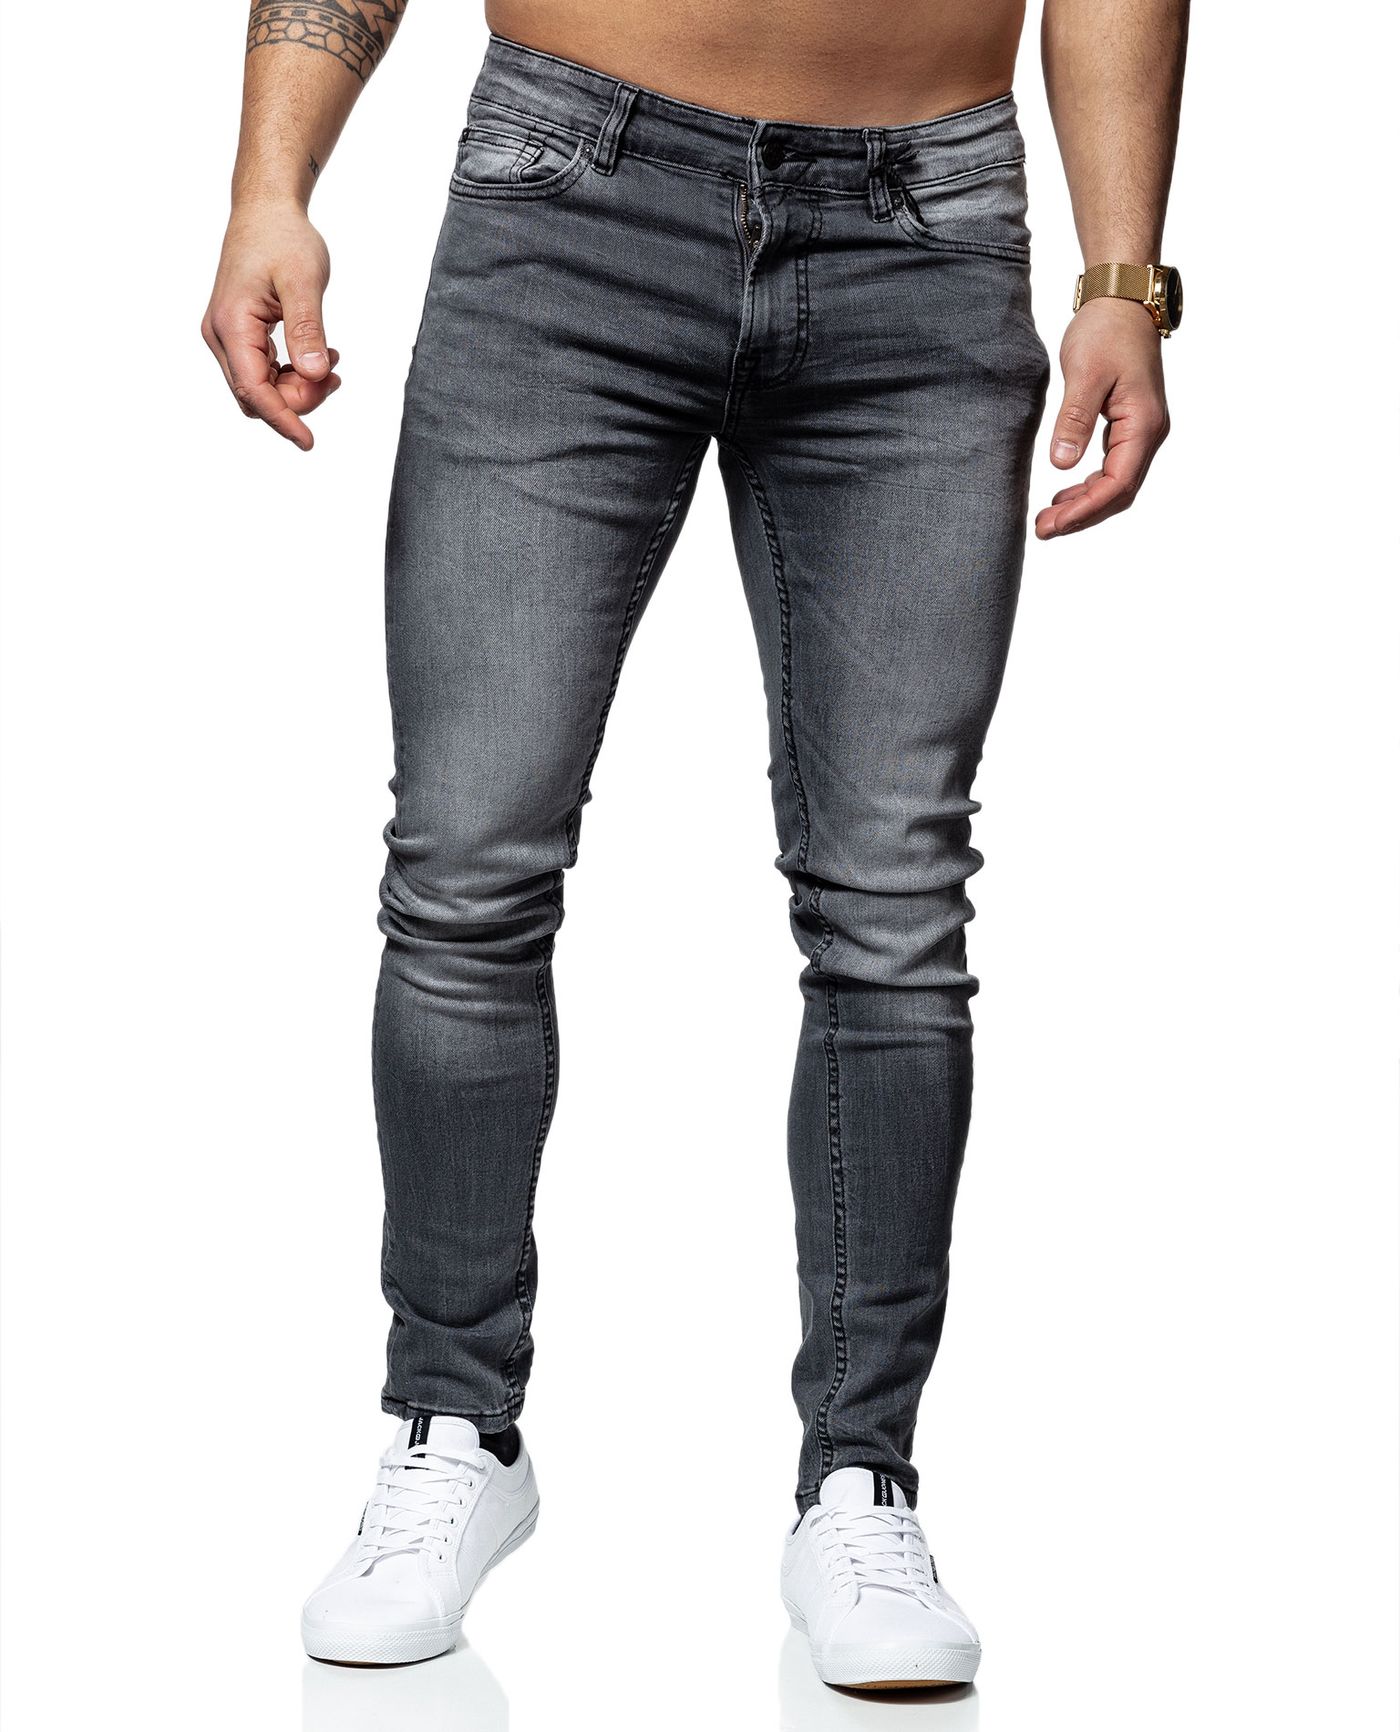 Trendy Men's Jeans! - Jerone.com